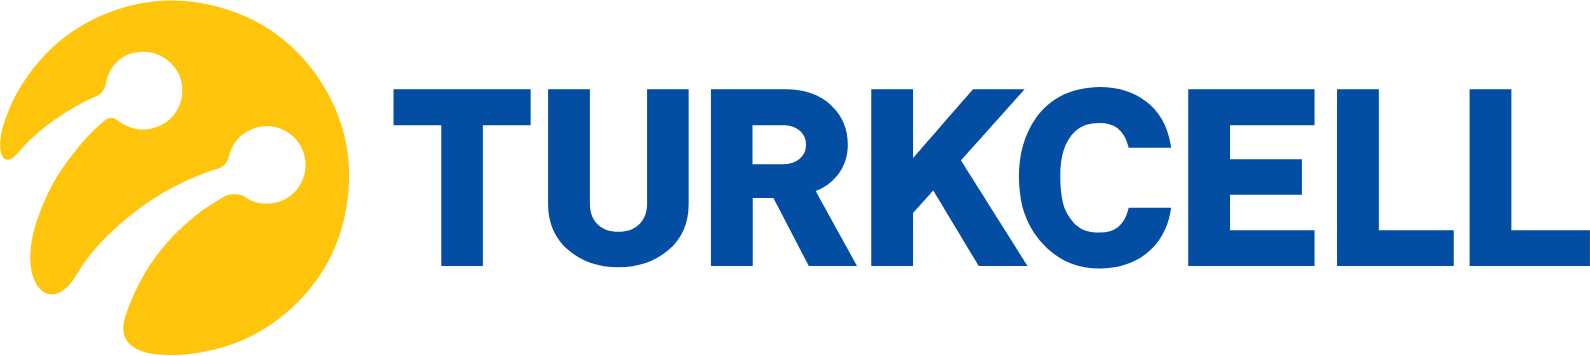 Turkcell logo large (transparent PNG)